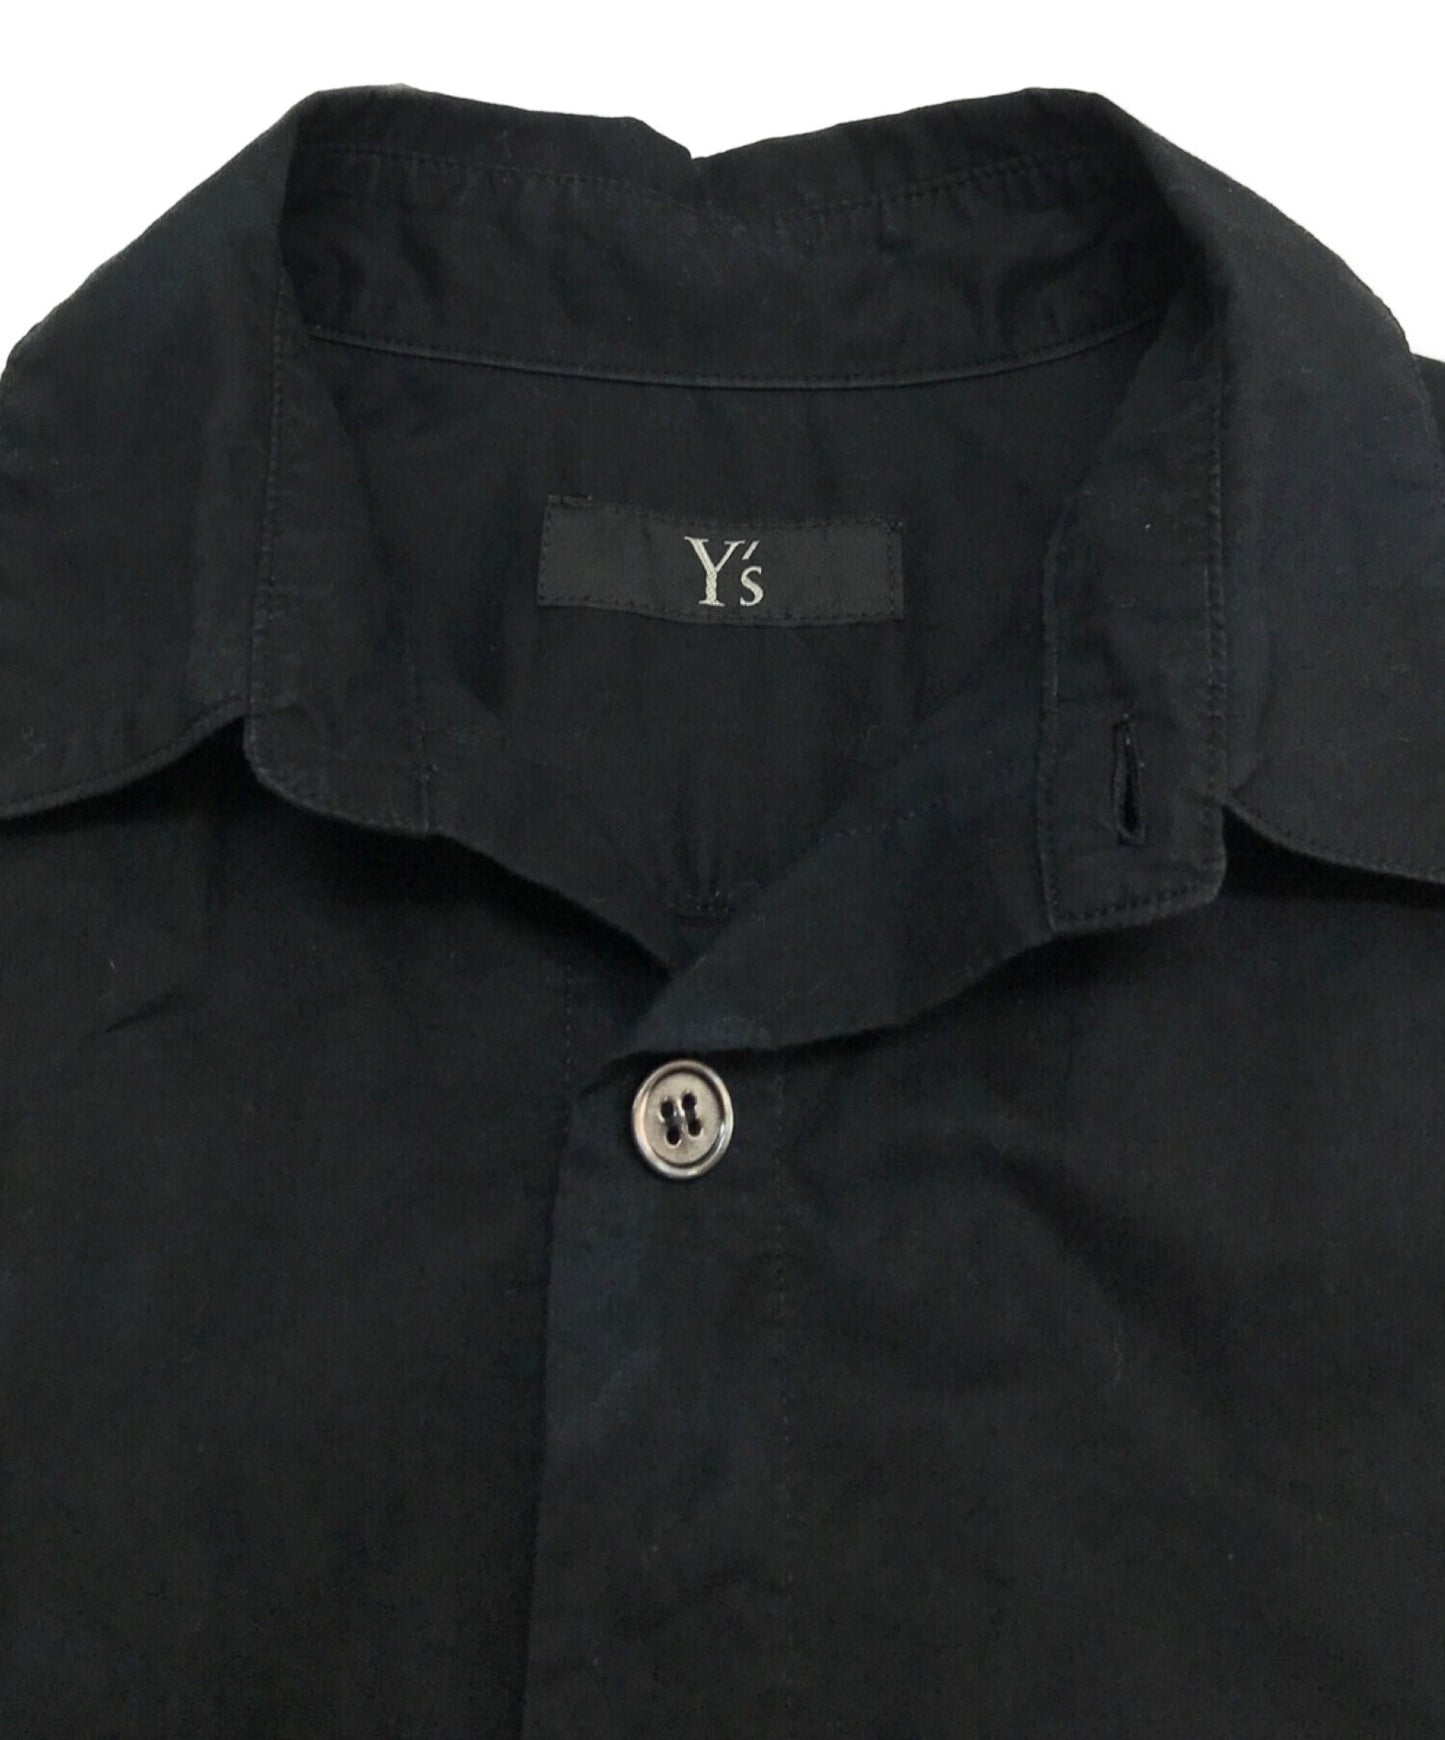 Y的長襯衫 /長袖襯衫 /設計襯衫 /襯衫 /固體襯衫YX-B08-001